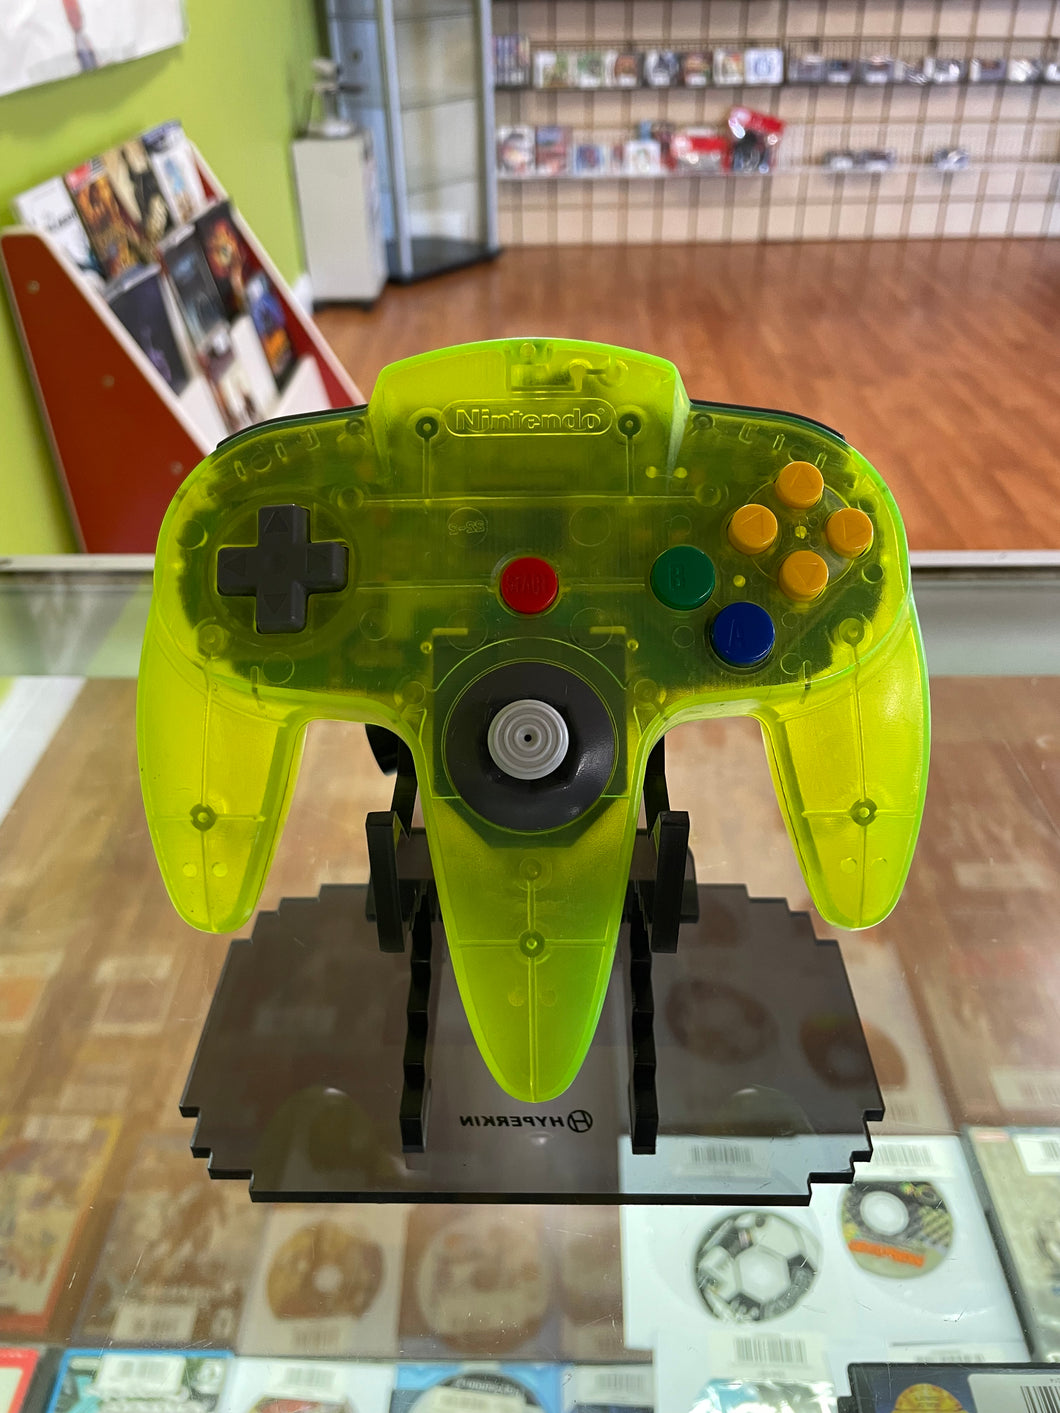 Extreme Green Neon Translucent Controller NUS-005 Toys“R”Us Exclusive Nintendo 64